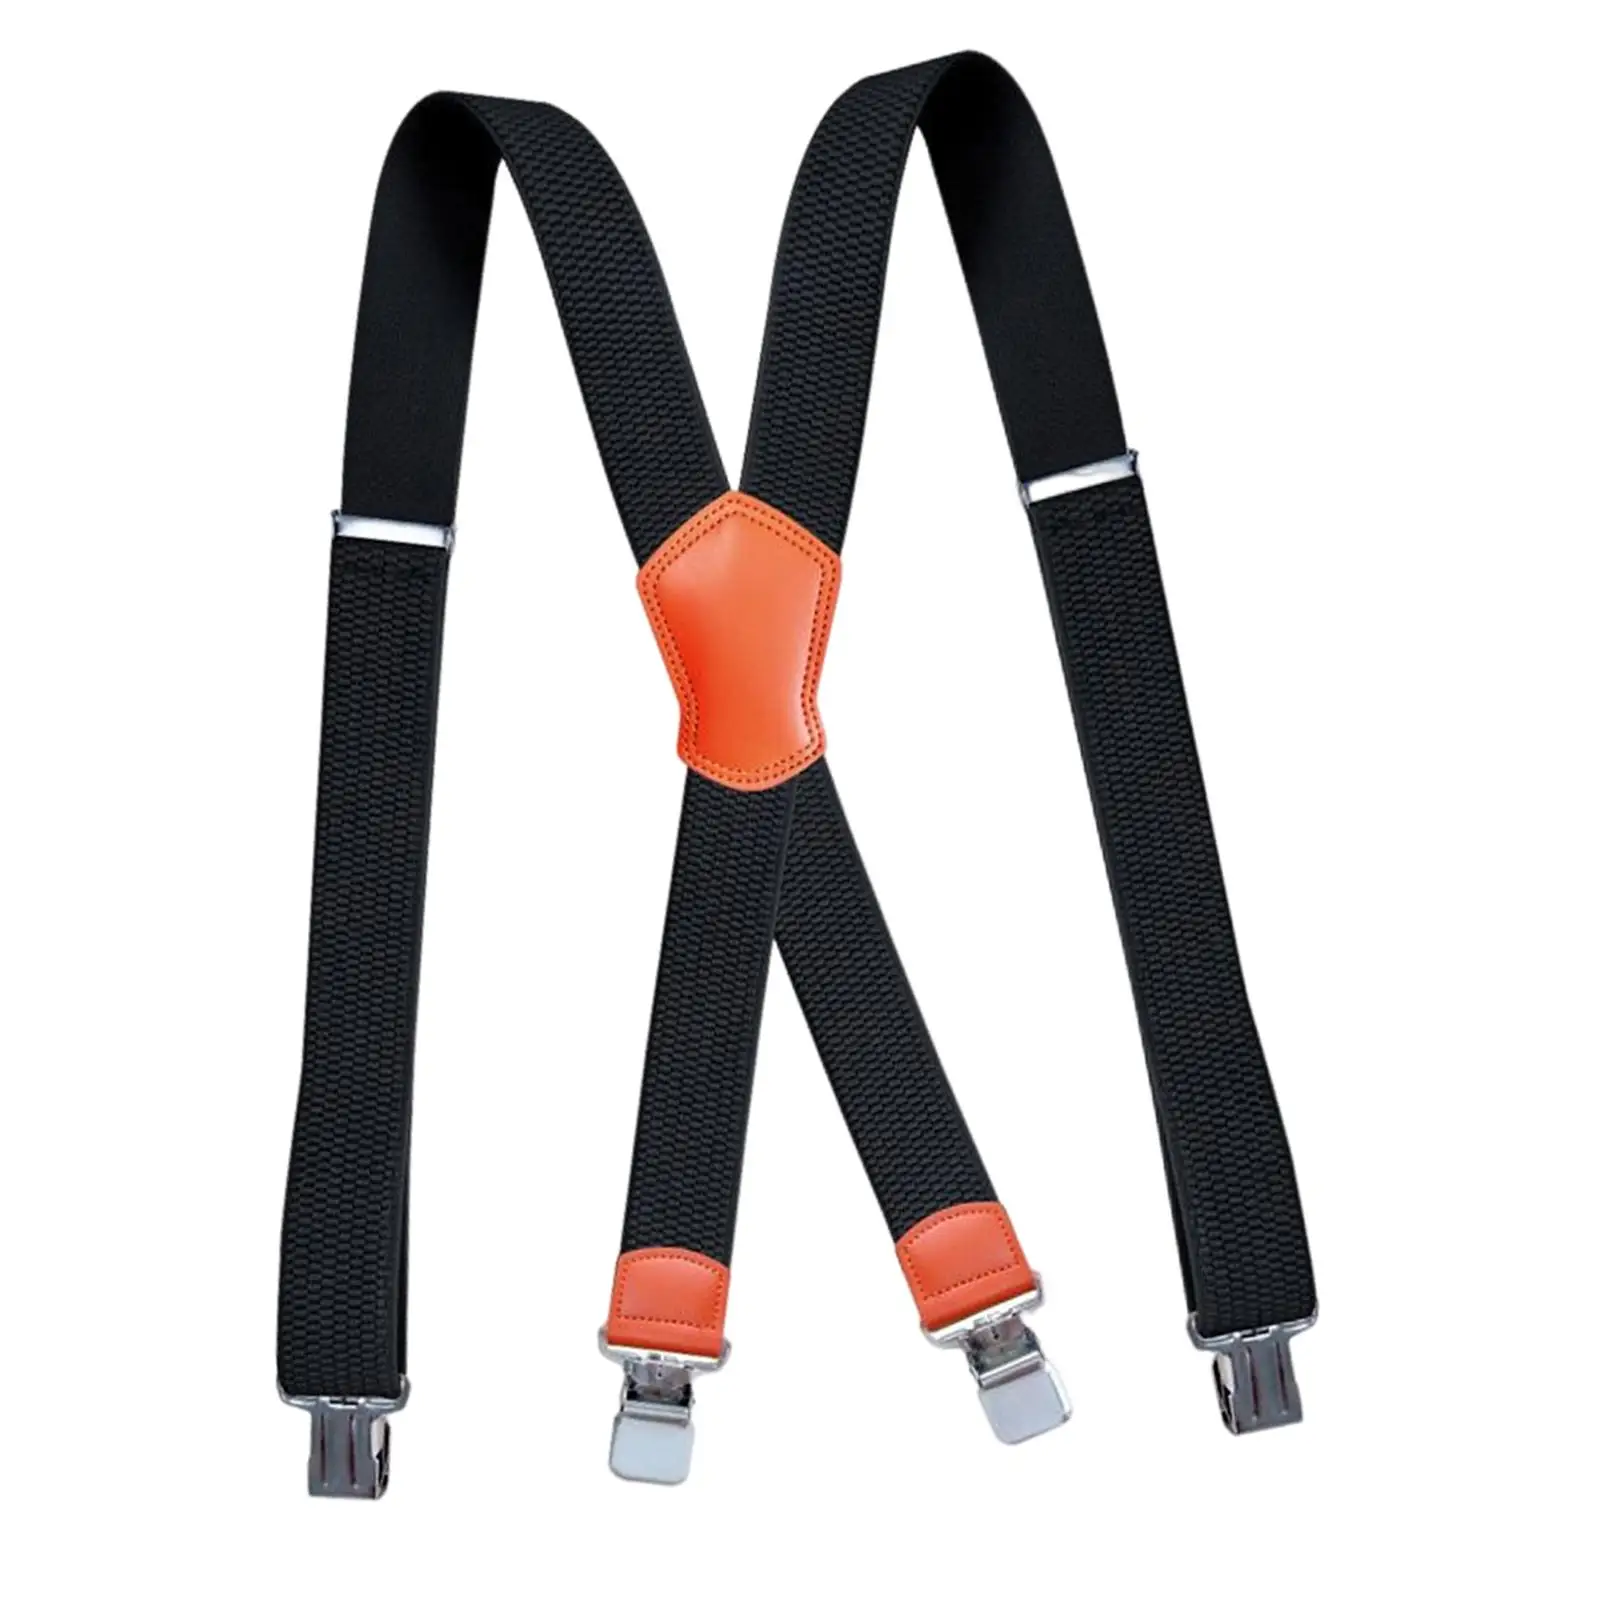 Suspenders for Men, Adjustable Elastic 1.5 inch Wide X Shape Suspenders with Heavy Duty Clips